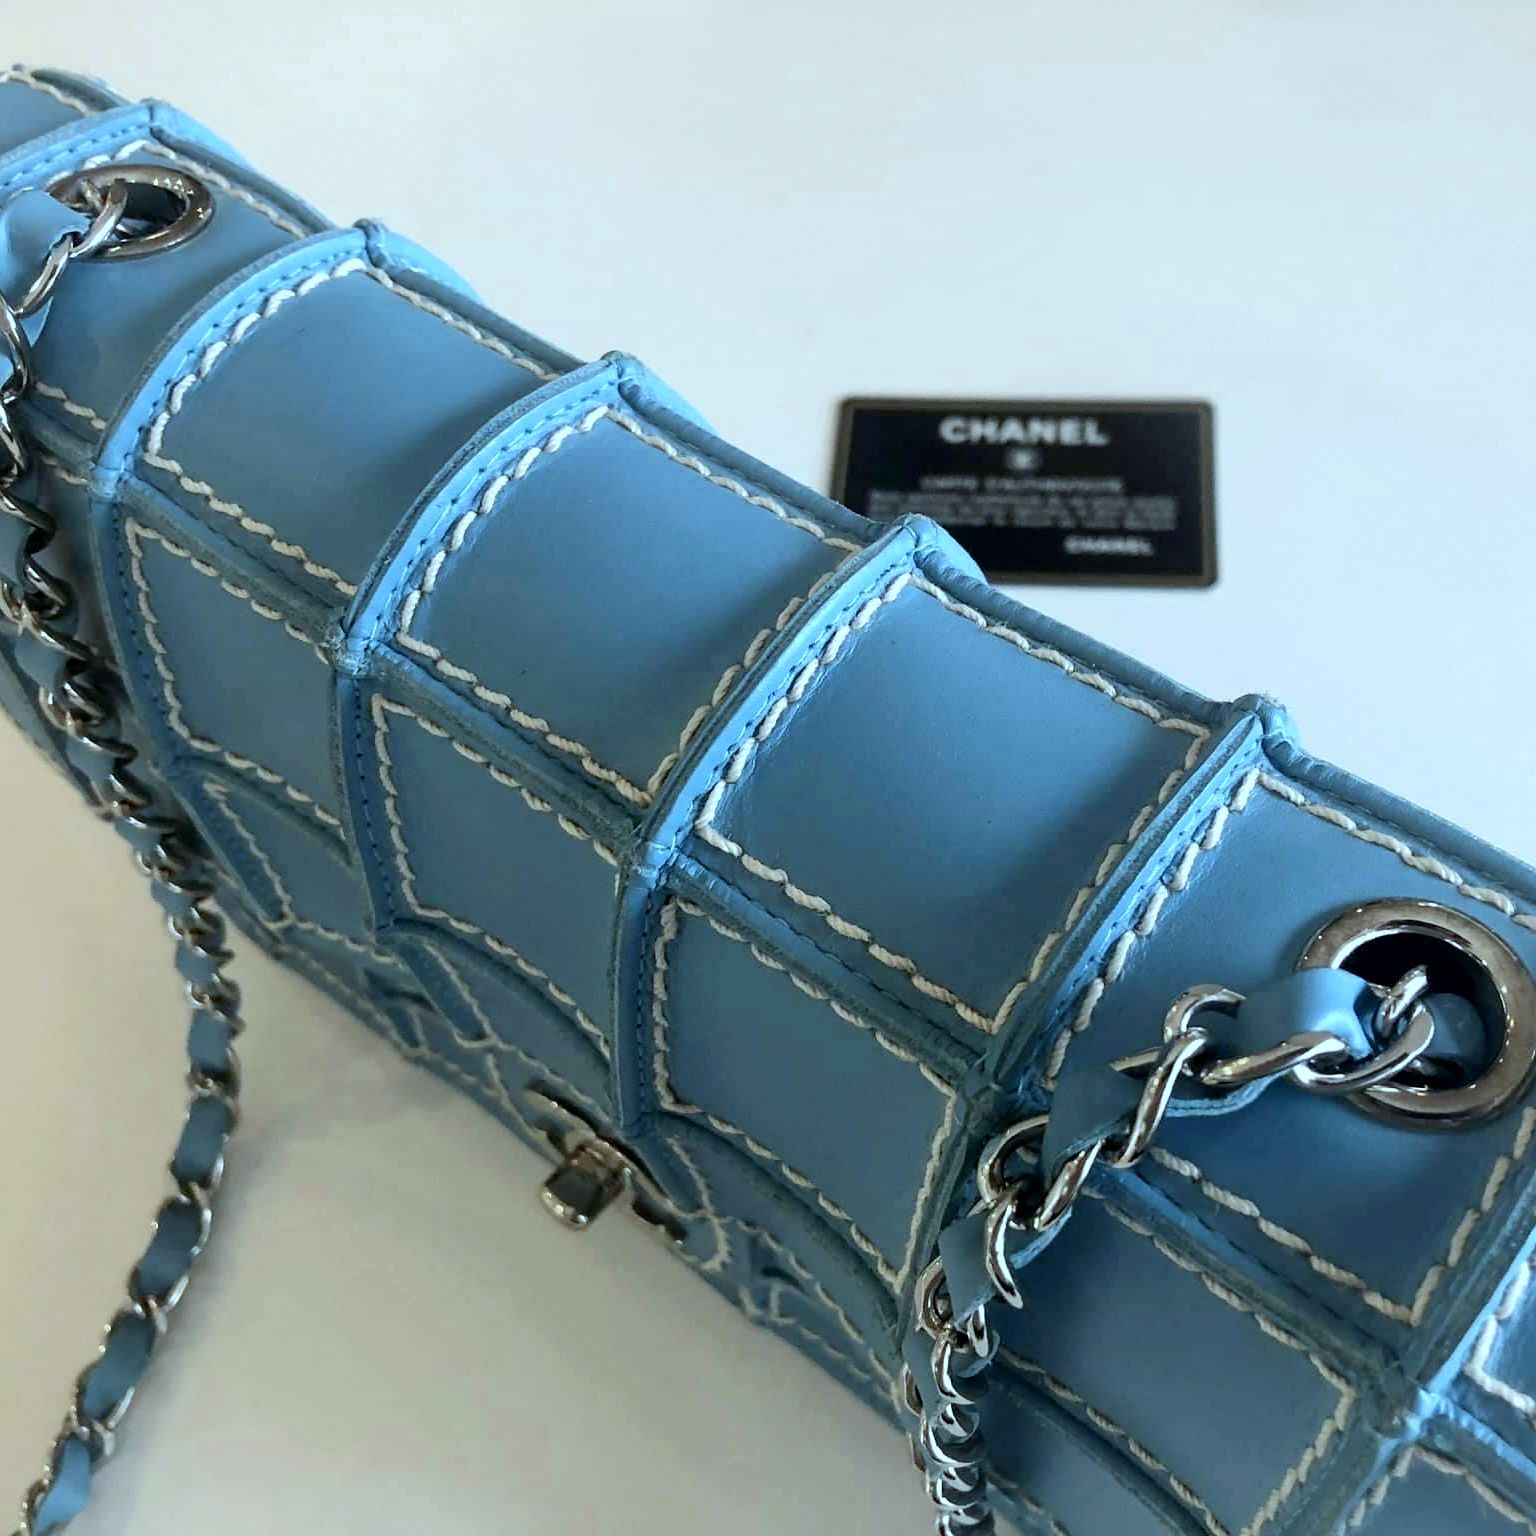 Authentic Vintage Chanel Bag Wild Stitch Blue